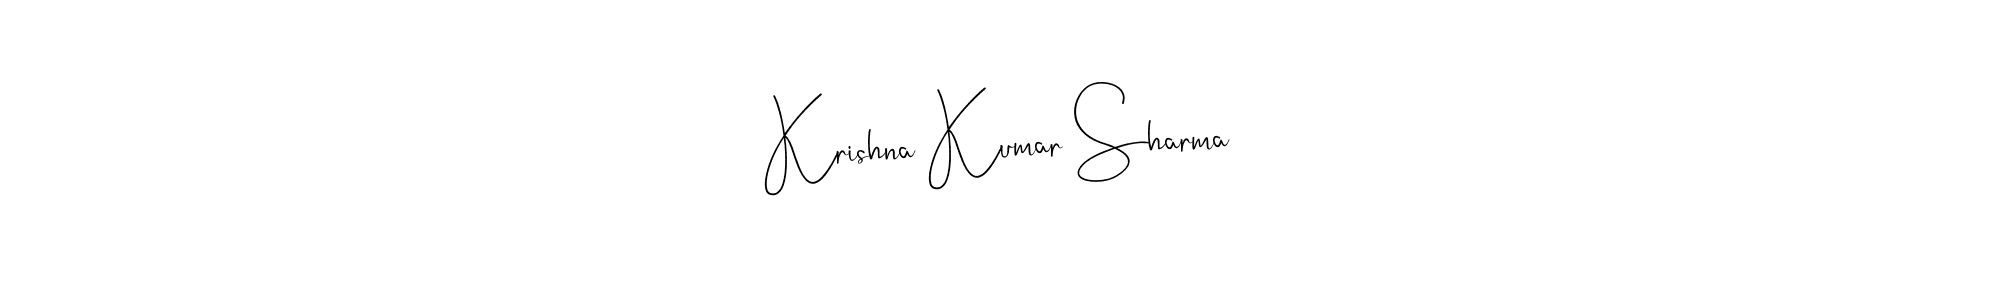 How to Draw Krishna Kumar Sharma signature style? Andilay-7BmLP is a latest design signature styles for name Krishna Kumar Sharma. Krishna Kumar Sharma signature style 4 images and pictures png